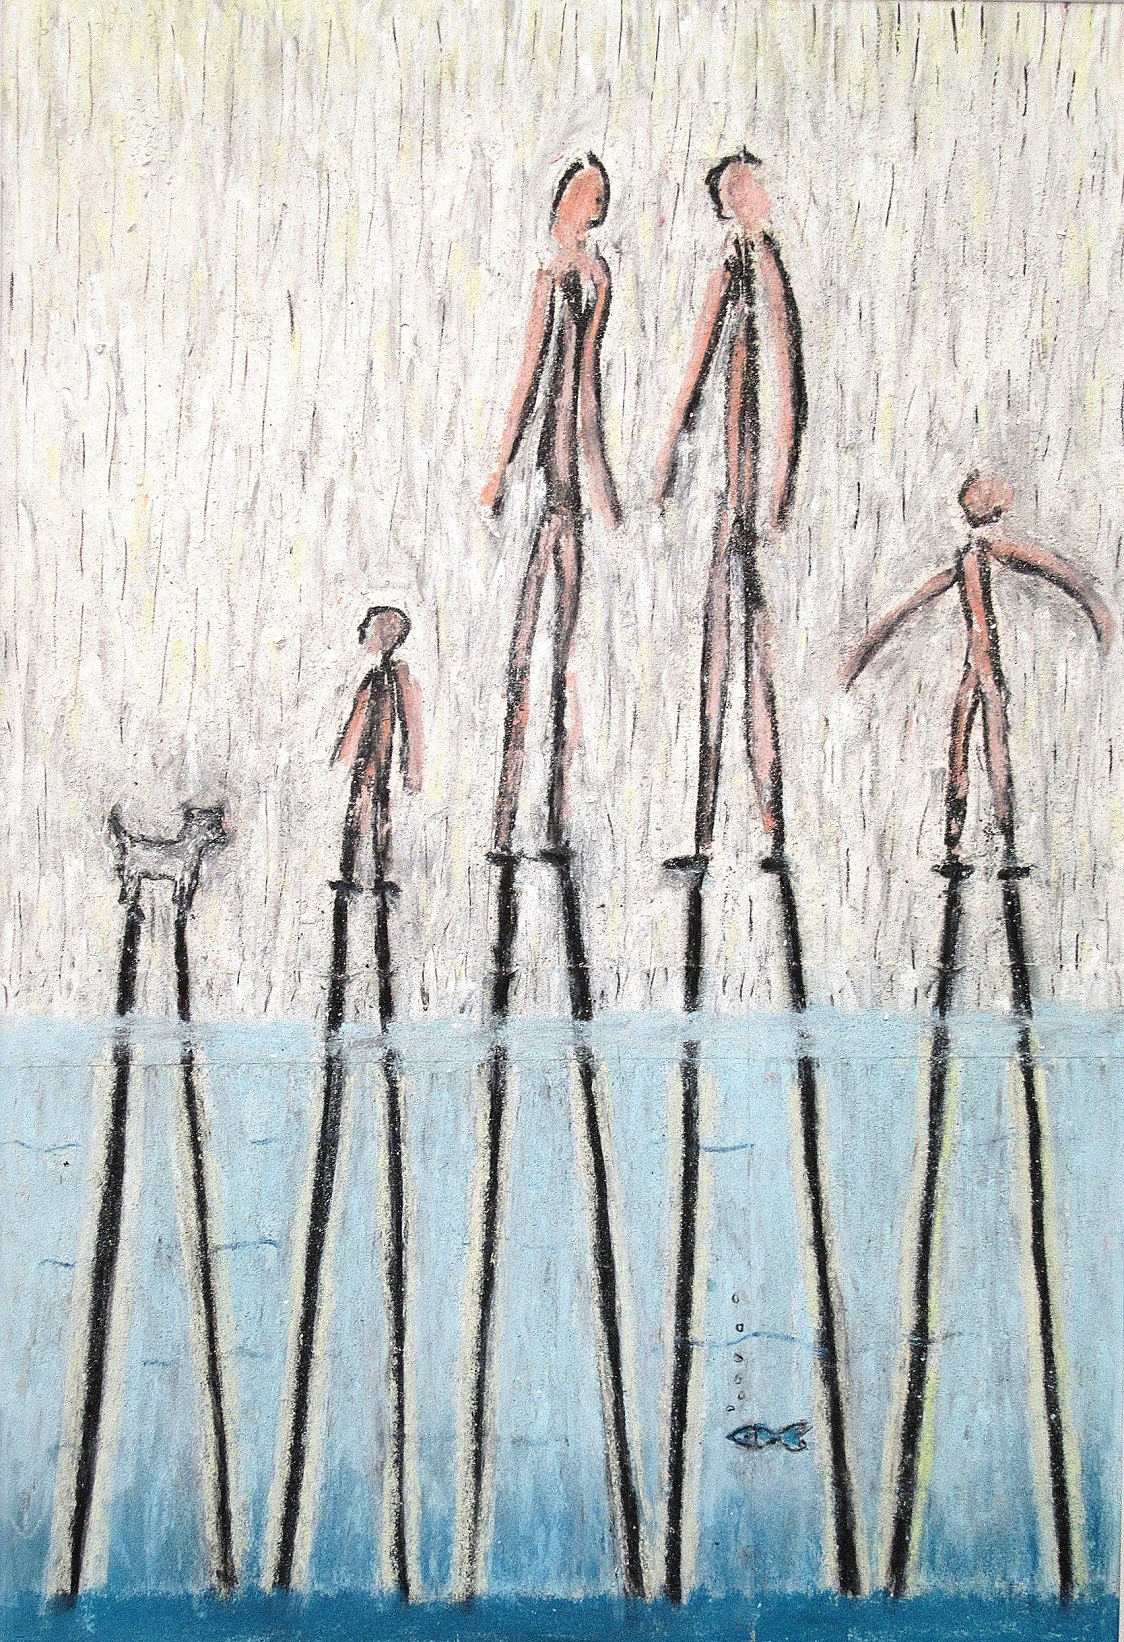 Walking on Stilts (2018, charcoal, pastel chalk, masking tape on paper, 30 cm x 42 cm)